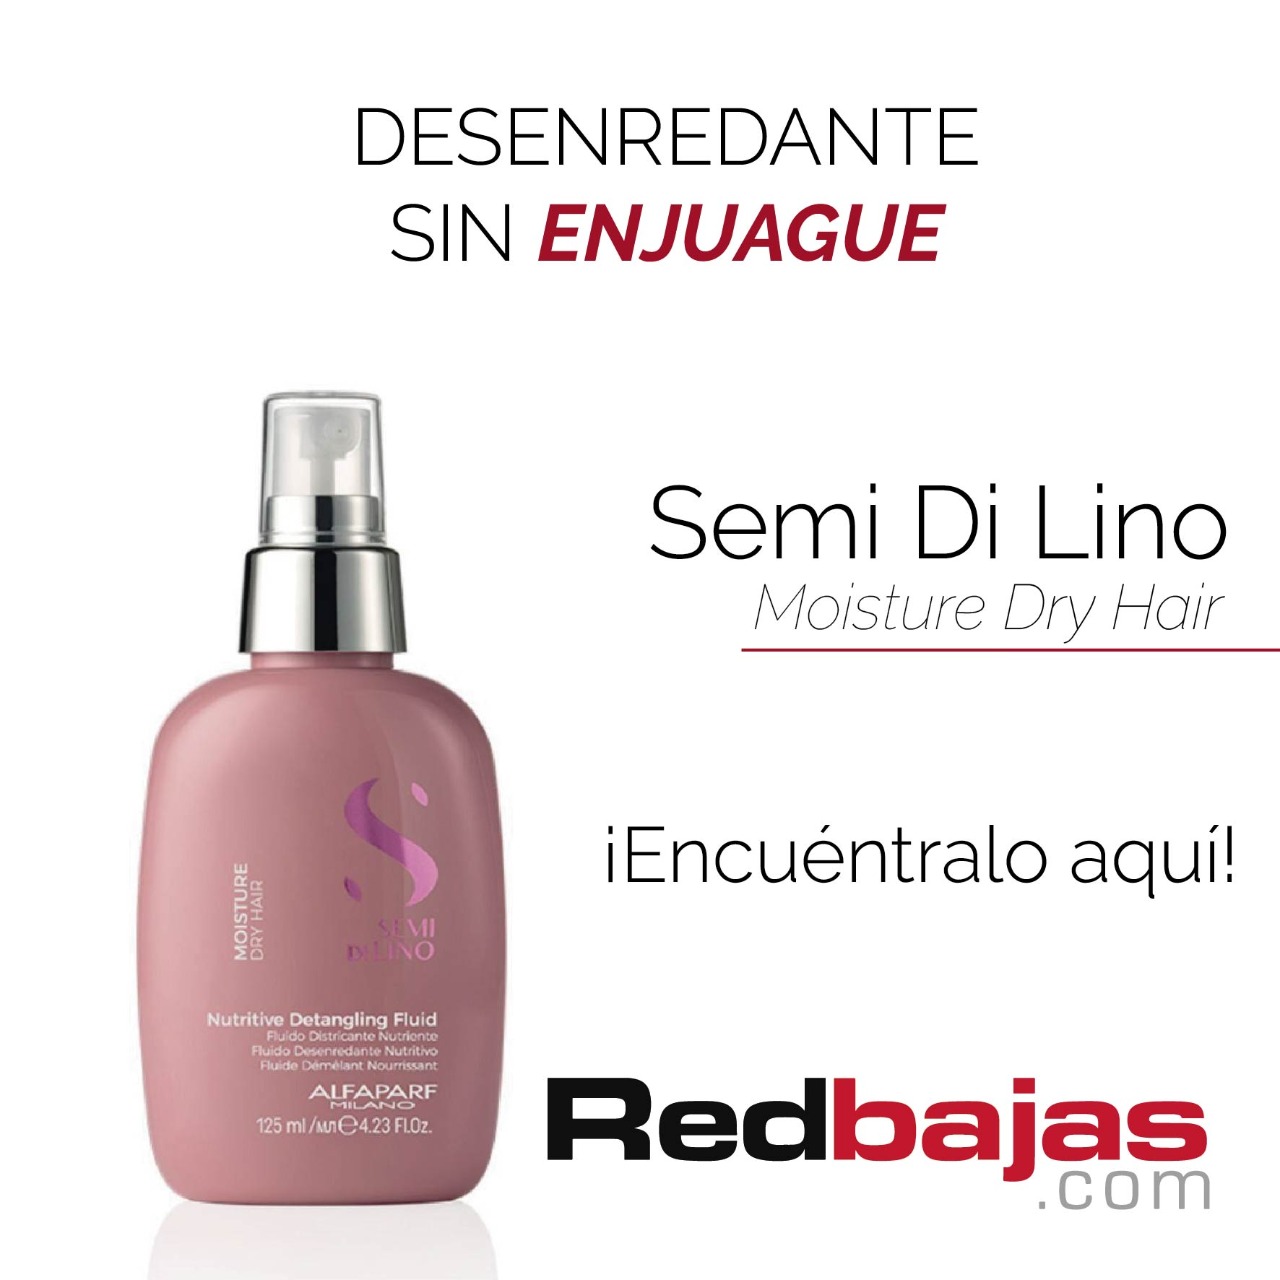 Semi Di Lino moisture Dry Hair